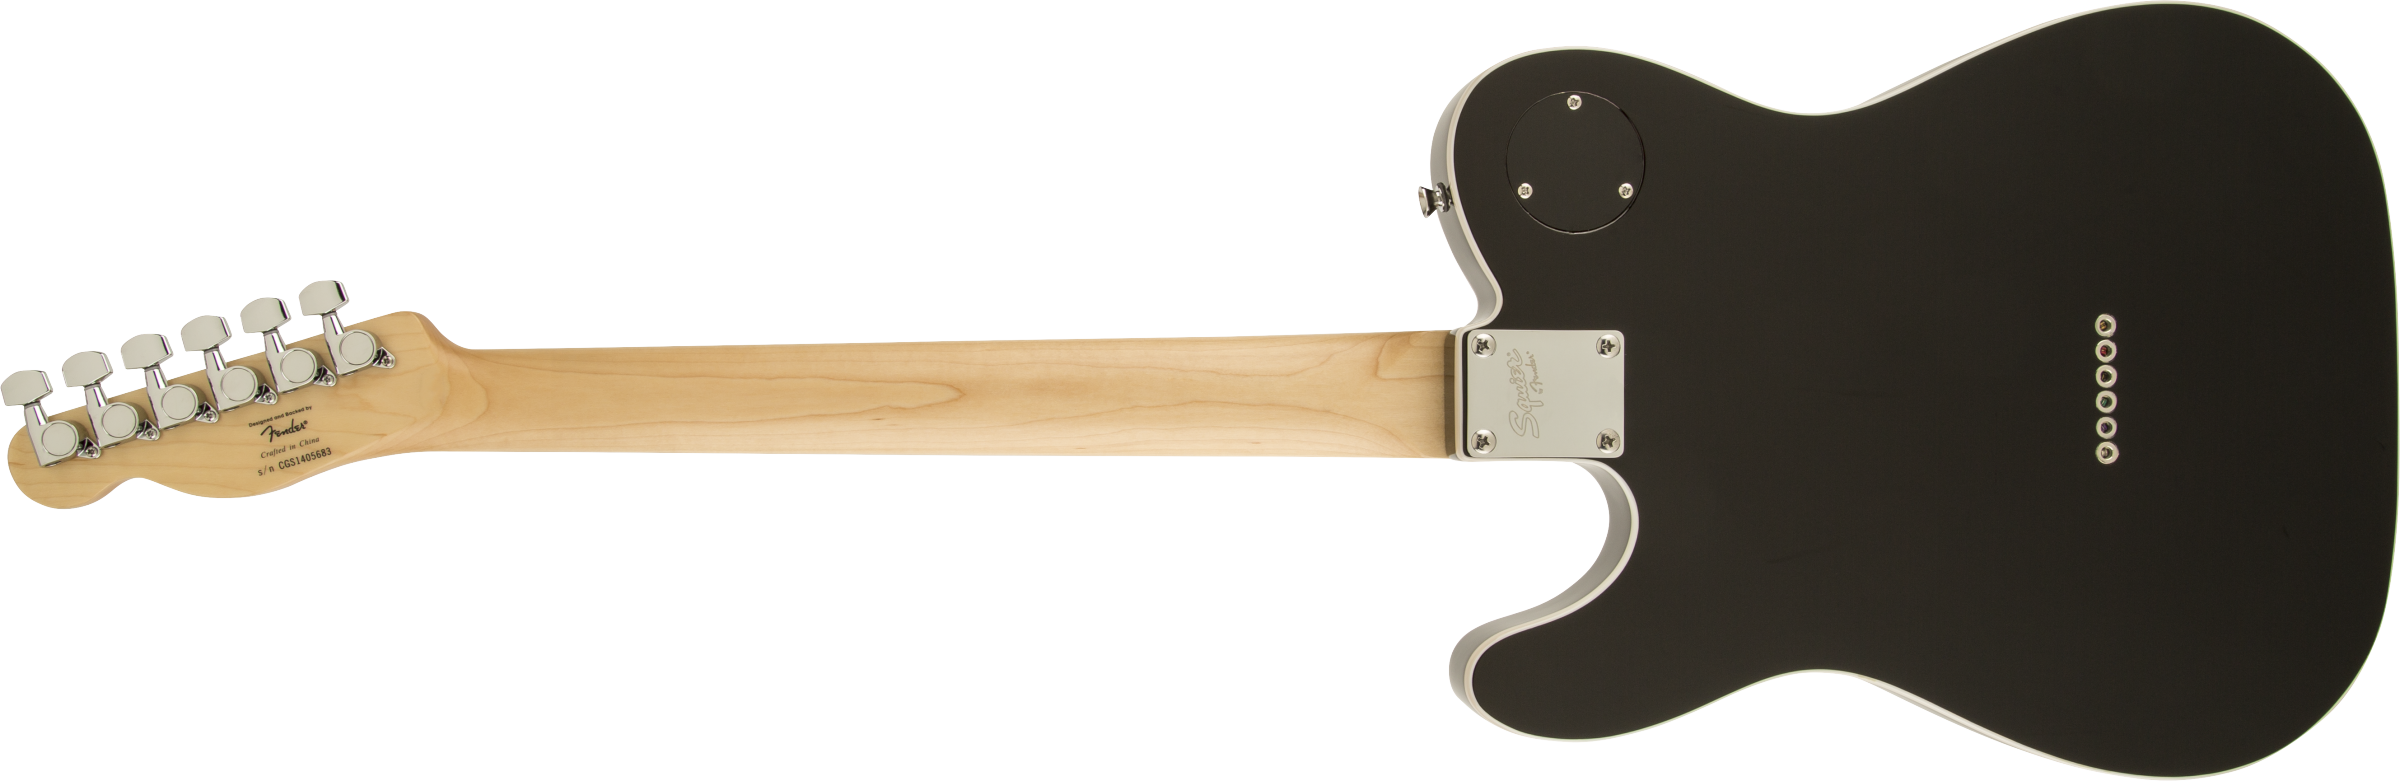 Fender Squier J5 HH Telecaster®, Laurel Fingerboard (Black) - Electric Guitar 電結他